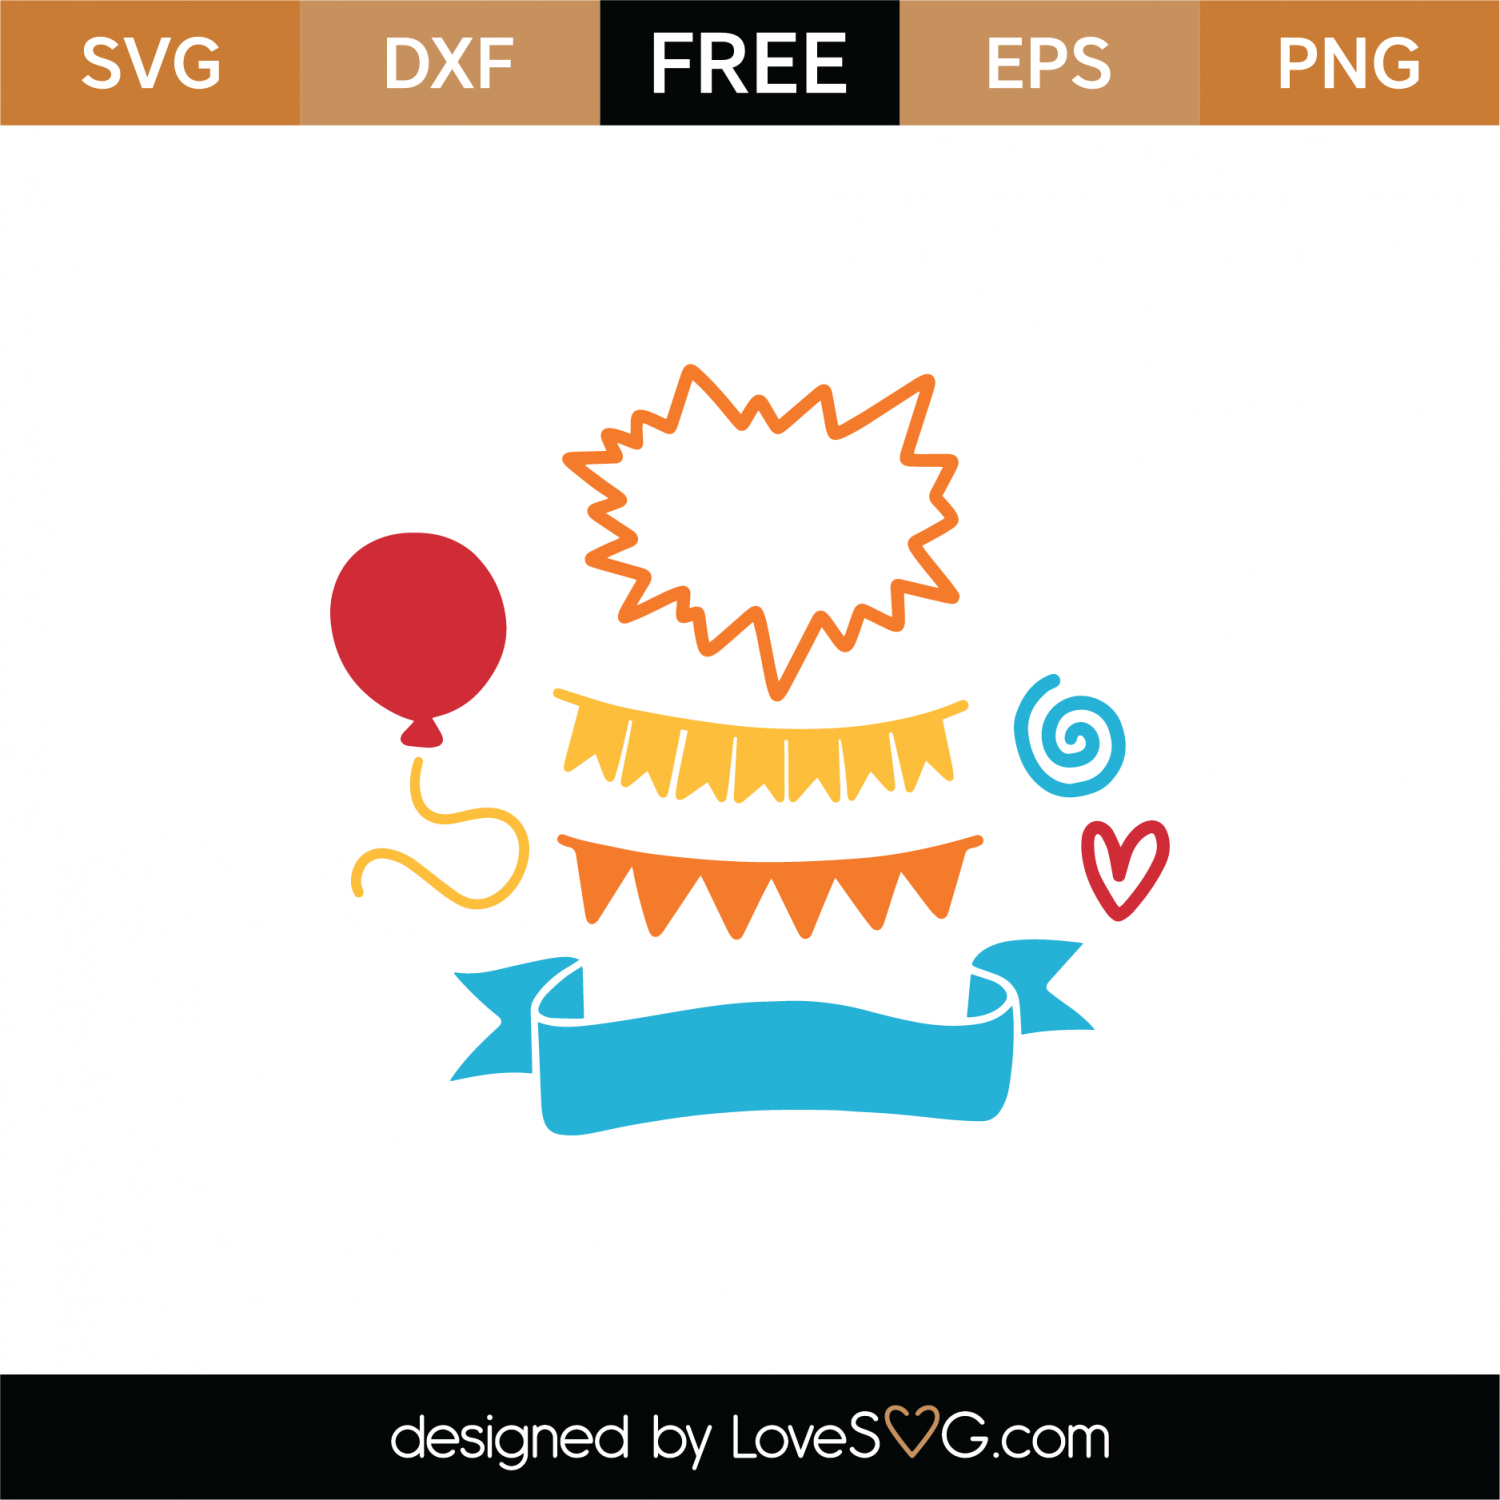 Download Free Birthday Banners SVG Cut File | Lovesvg.com